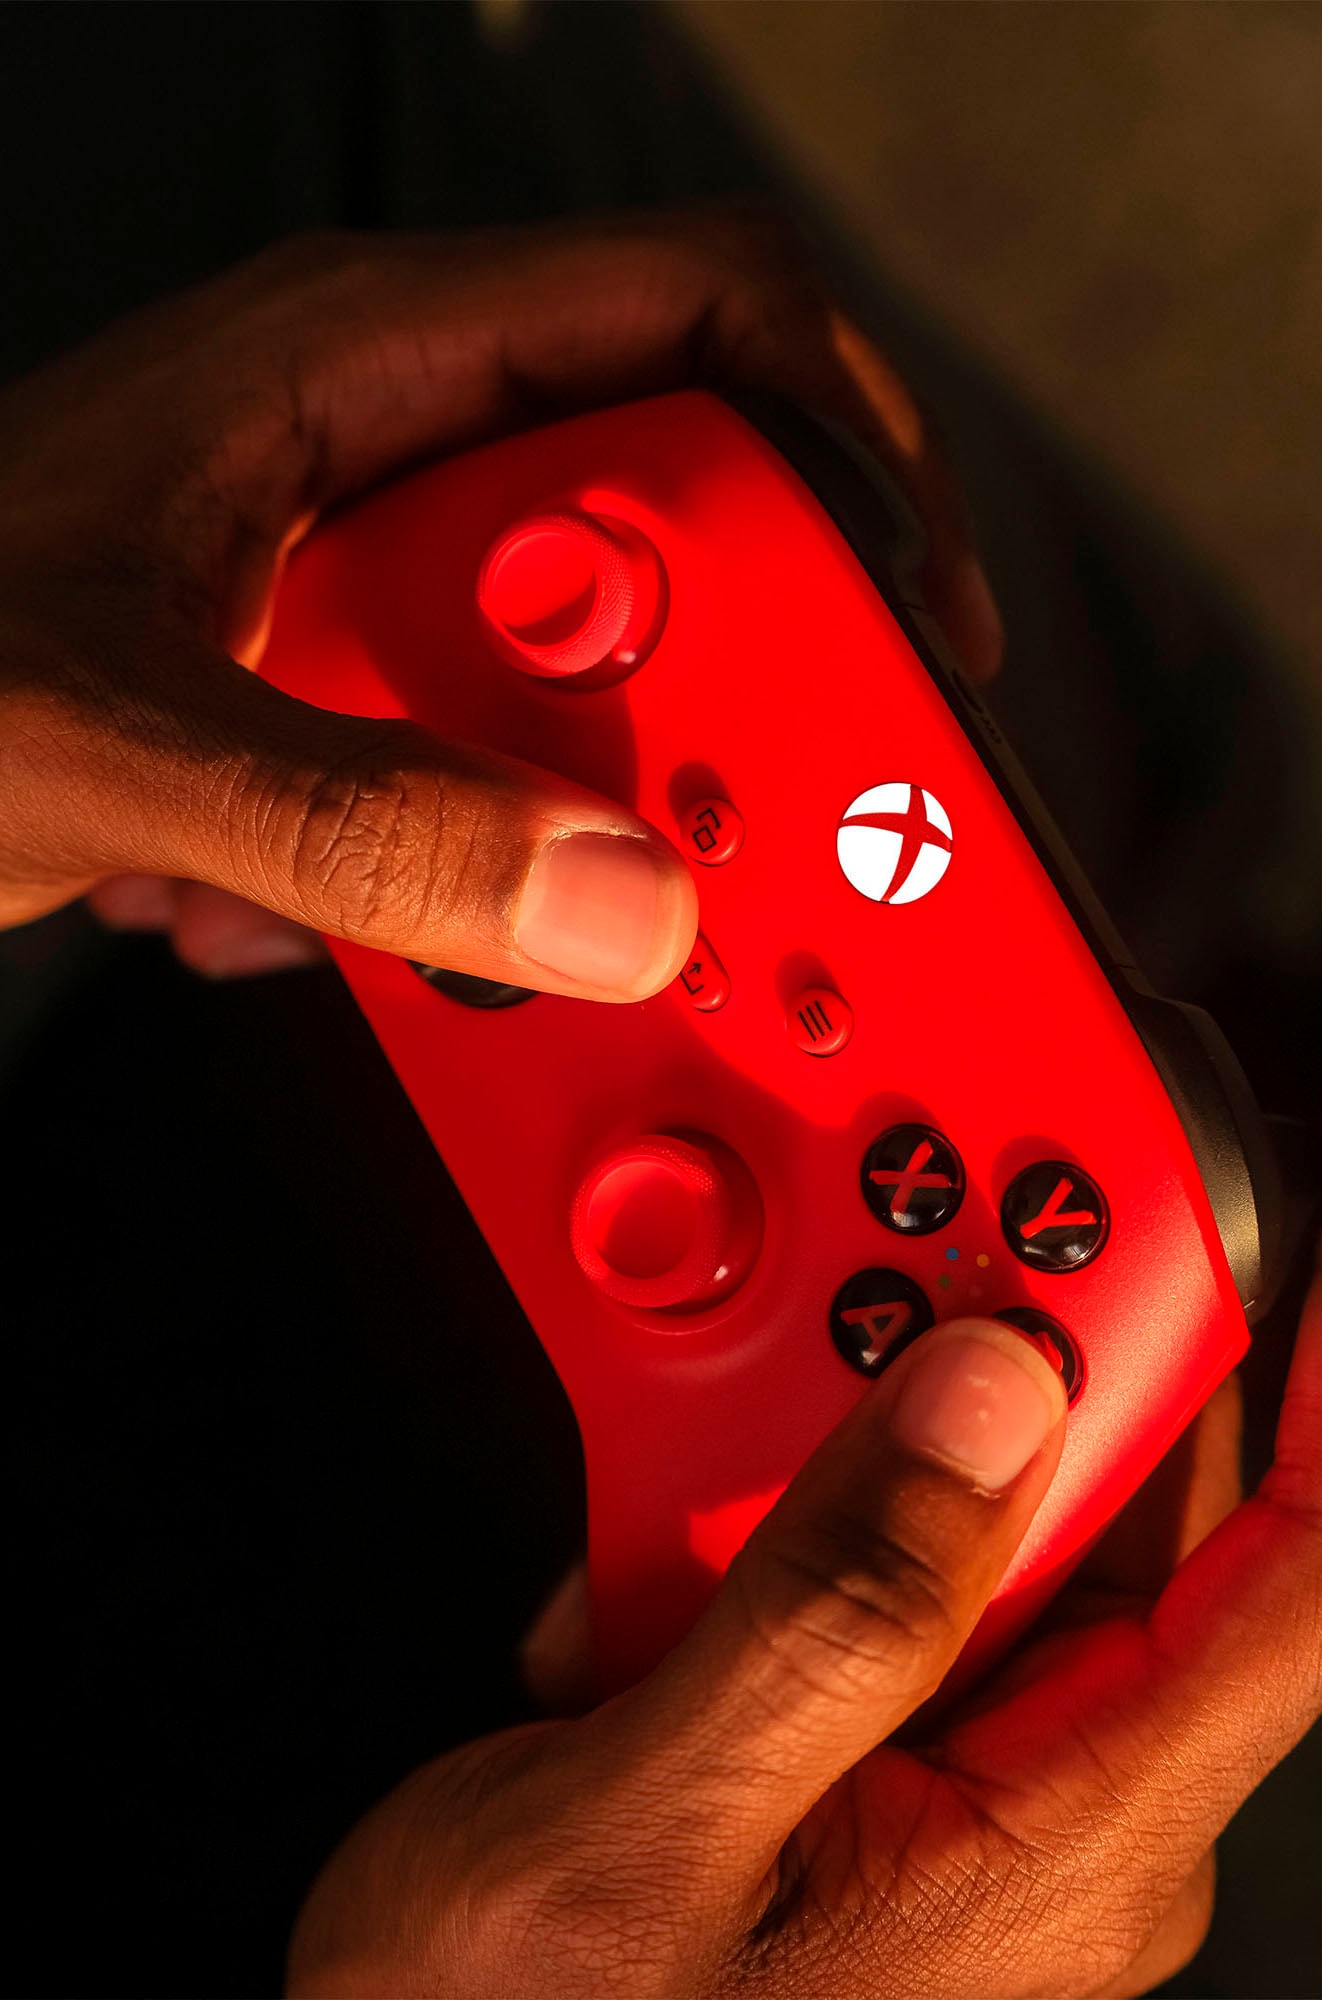 Xbox Xbox-Controller »Pulse Red«